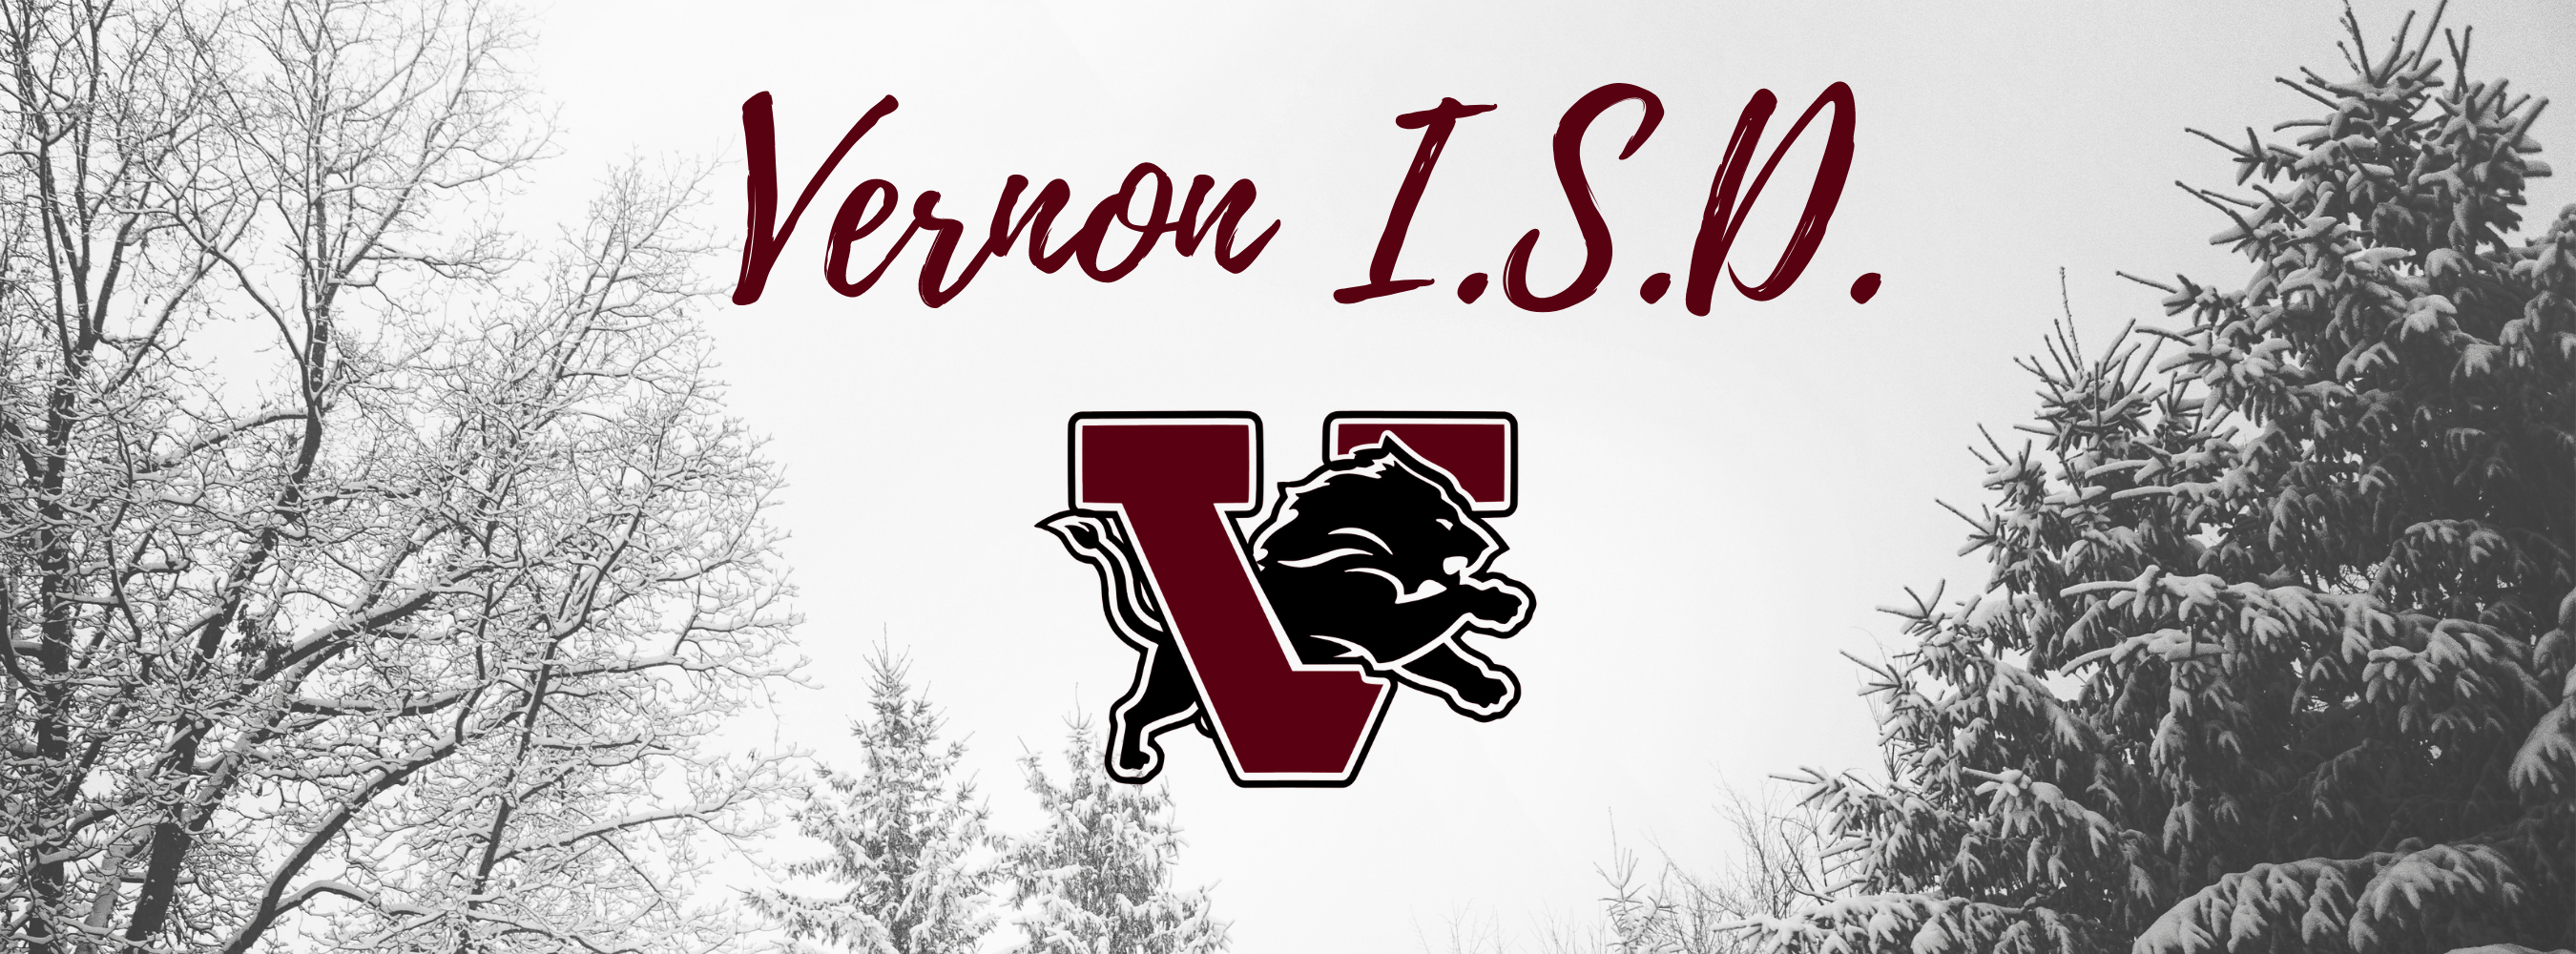 Vernon ISD